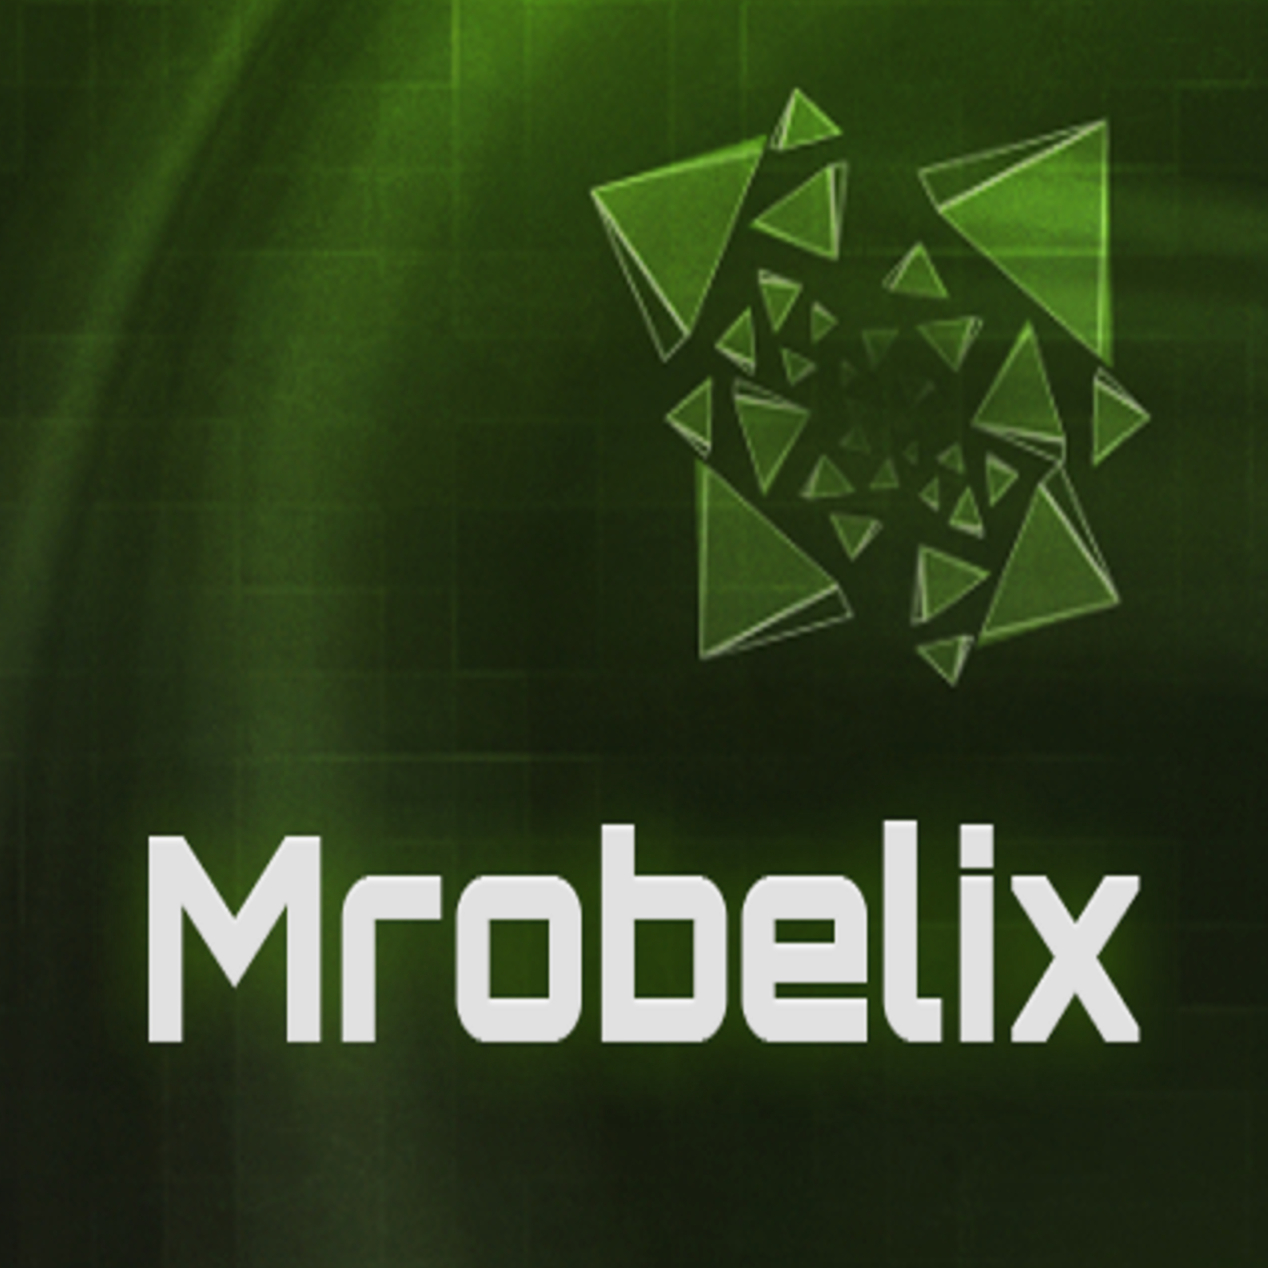 Mrobelix logo